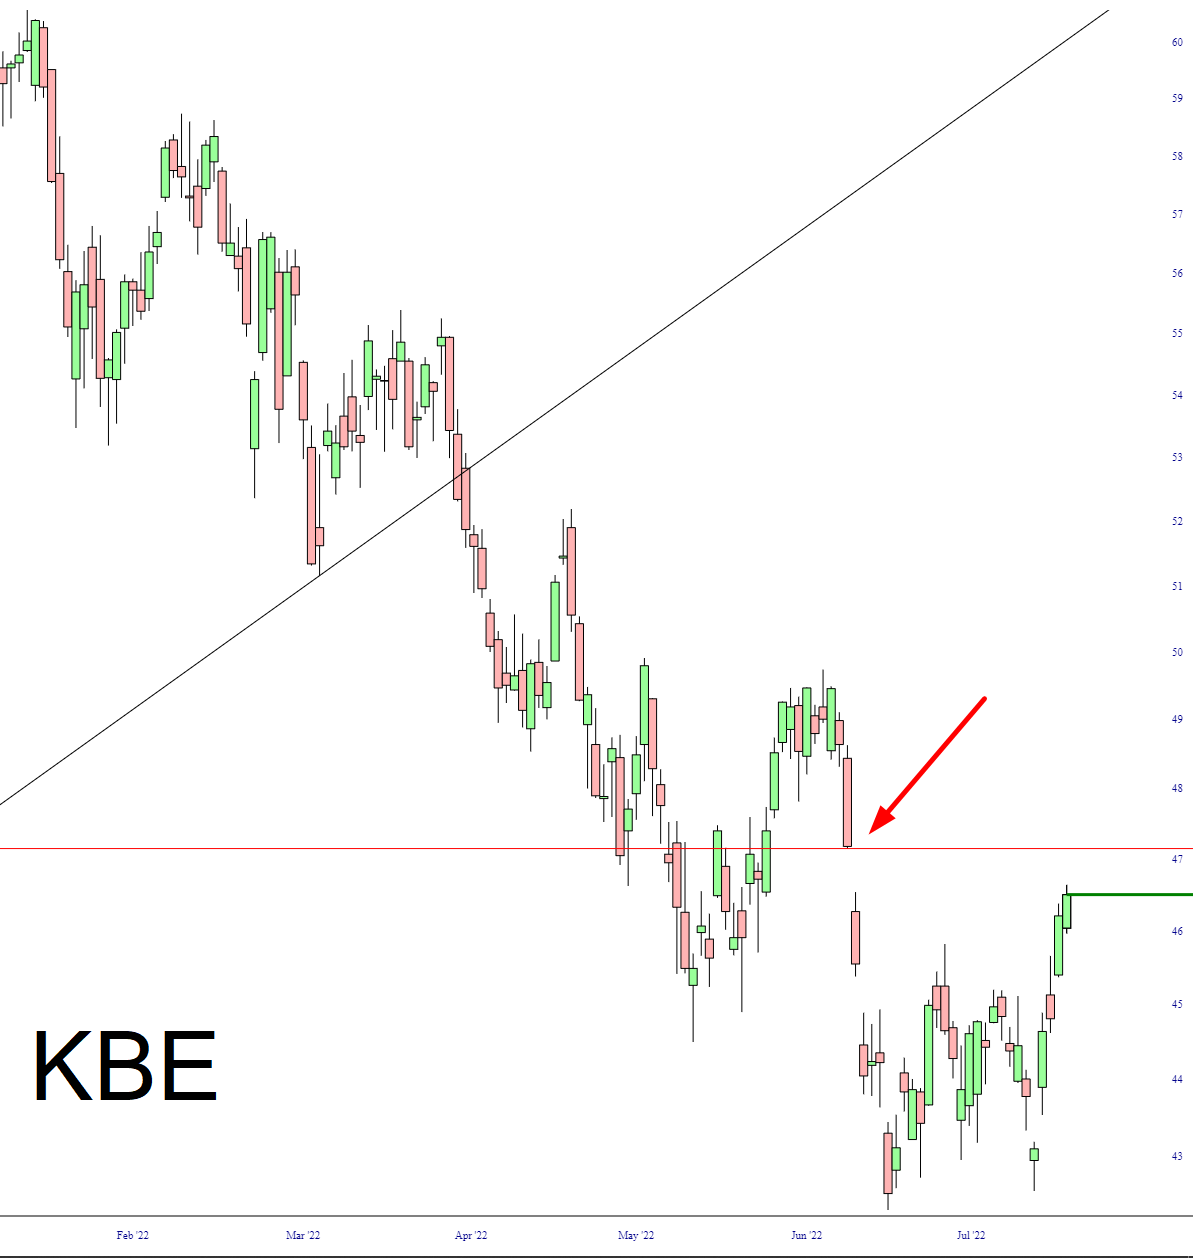 KBE Chart.